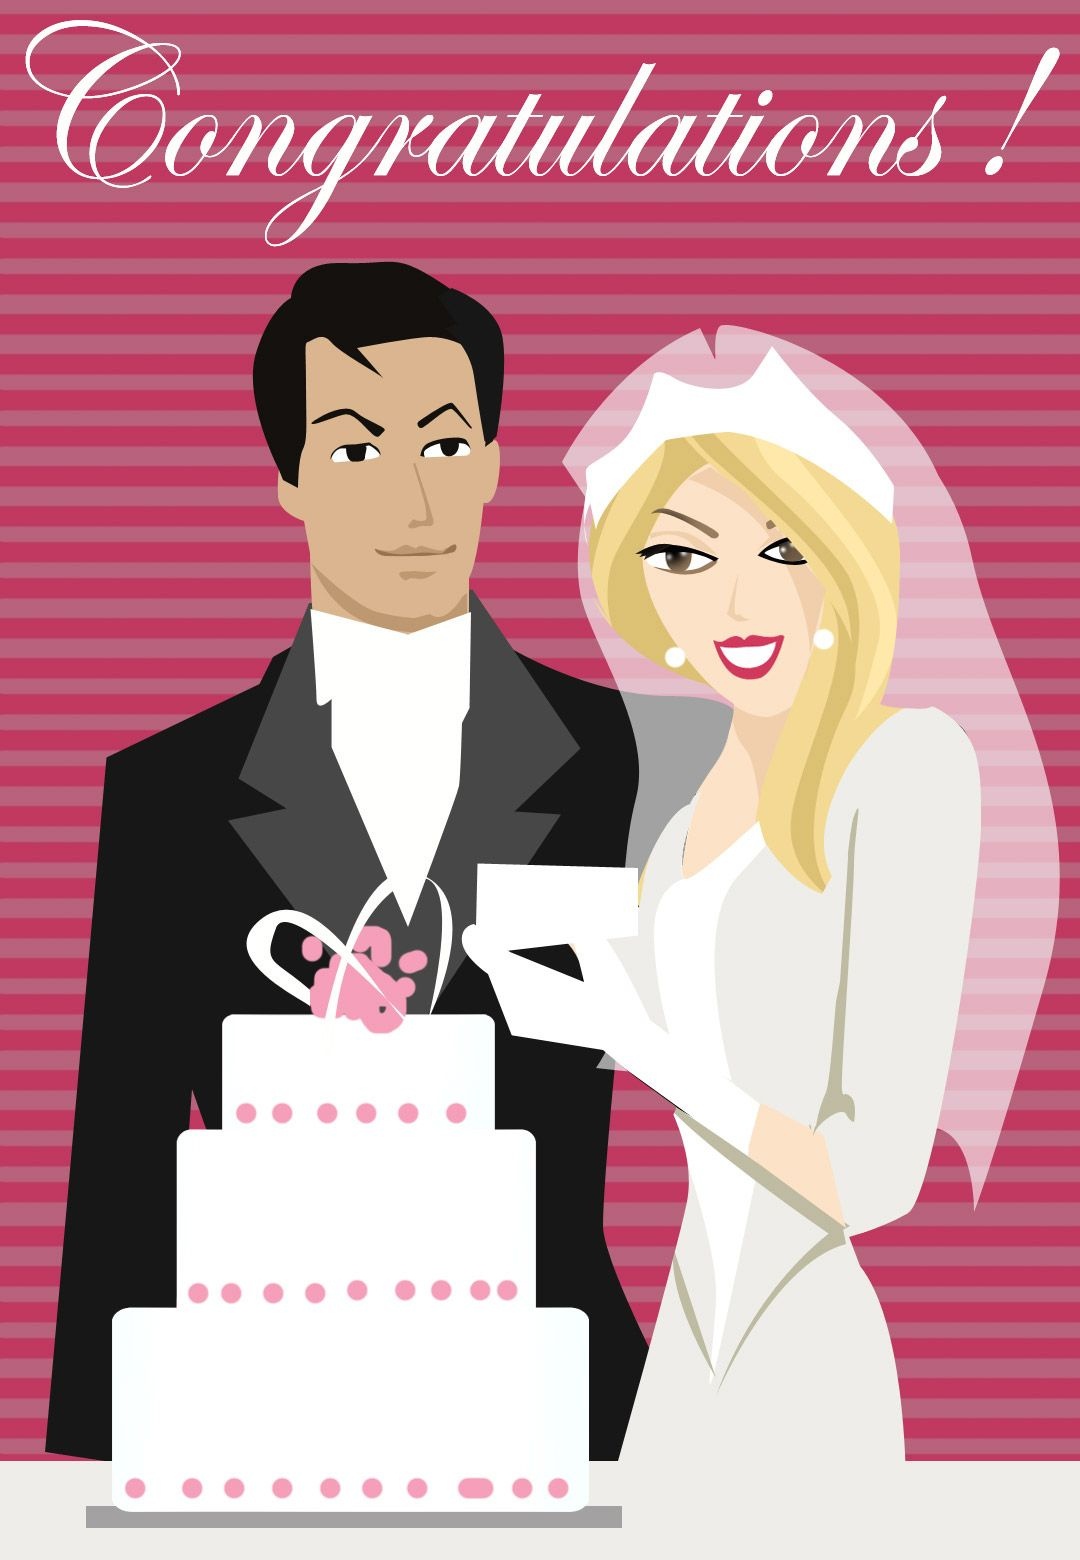 Free Printable Congratulations Greeting Card | Wedding Cards To - Wedding Wish Cards Printable Free